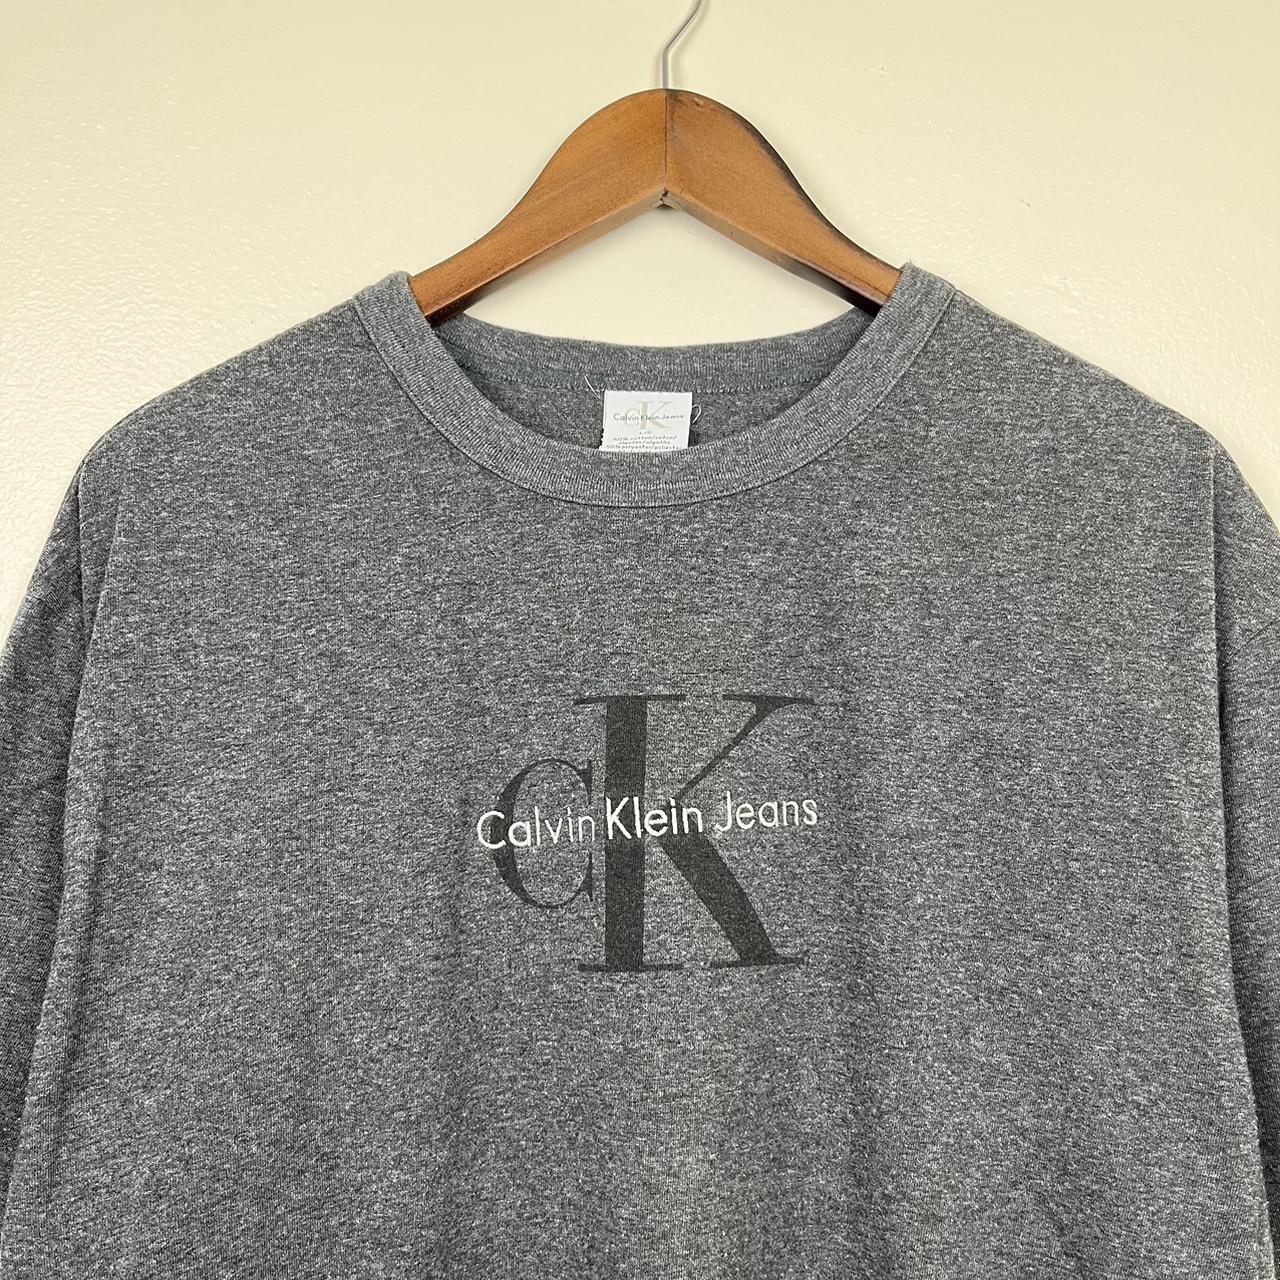 Calvin Klein Men's Grey and Black T-shirt | Depop